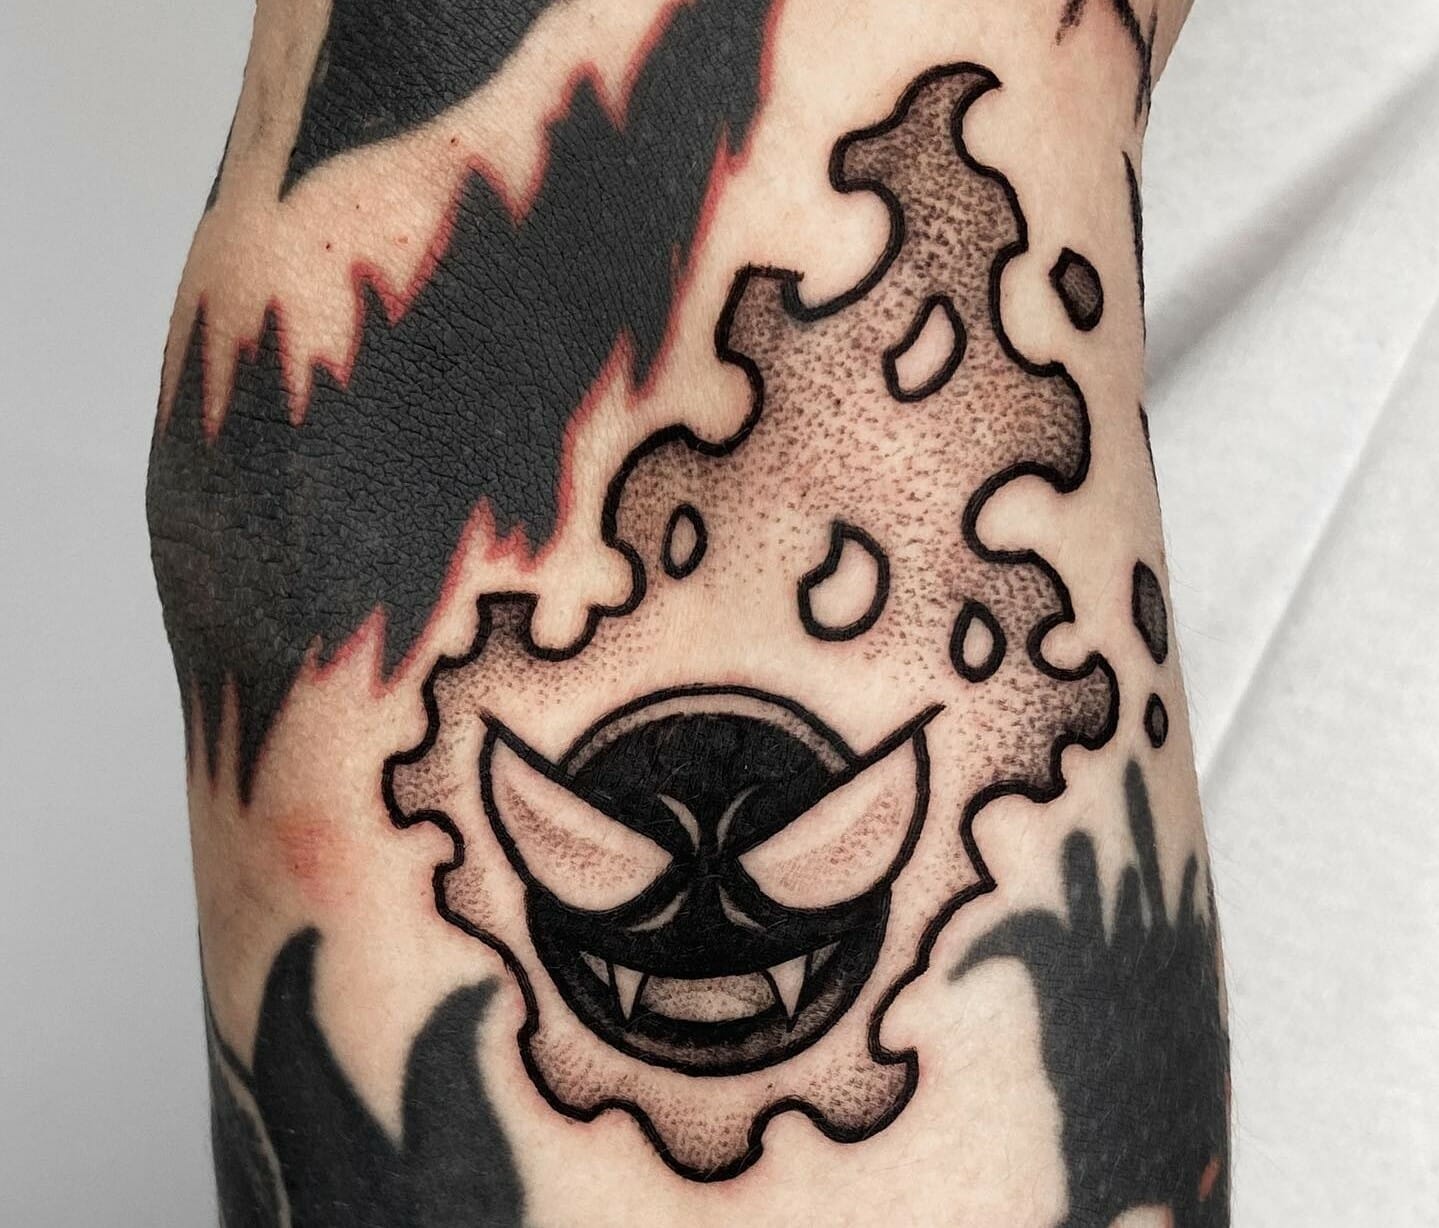 Filler  Smoke Flames Shading FillerTattoo HalfSleeve TattooArtist  inkbunni  By Inkbunni Tattoos  Facebook